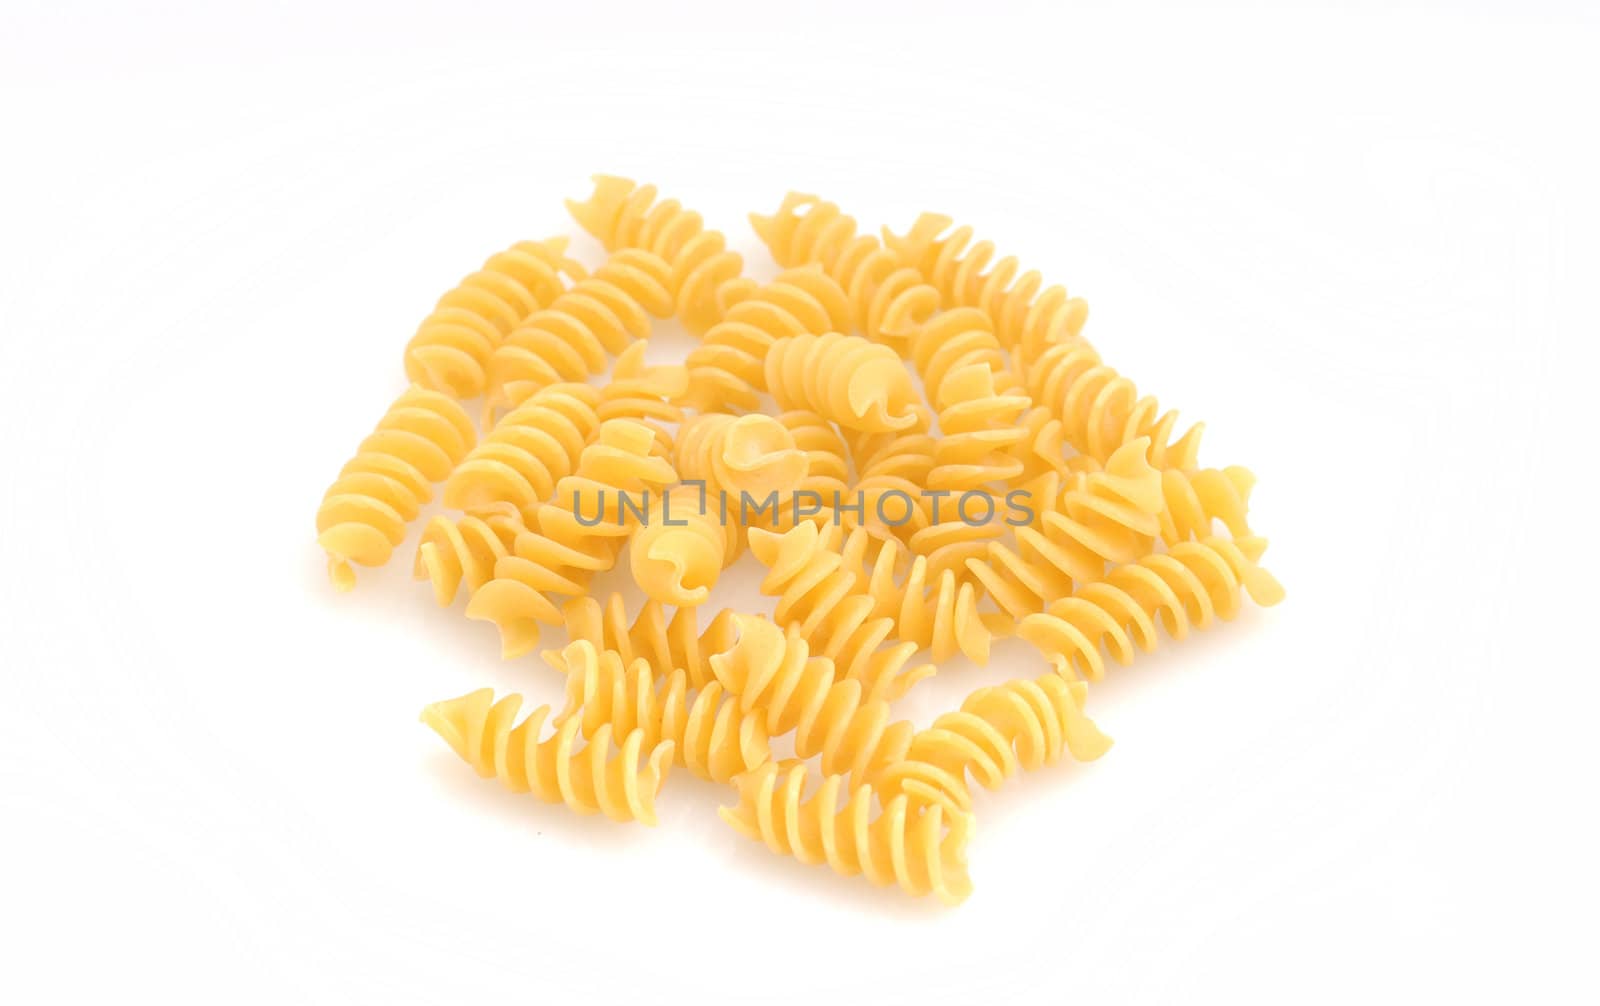 raw rotelli pasta on white background